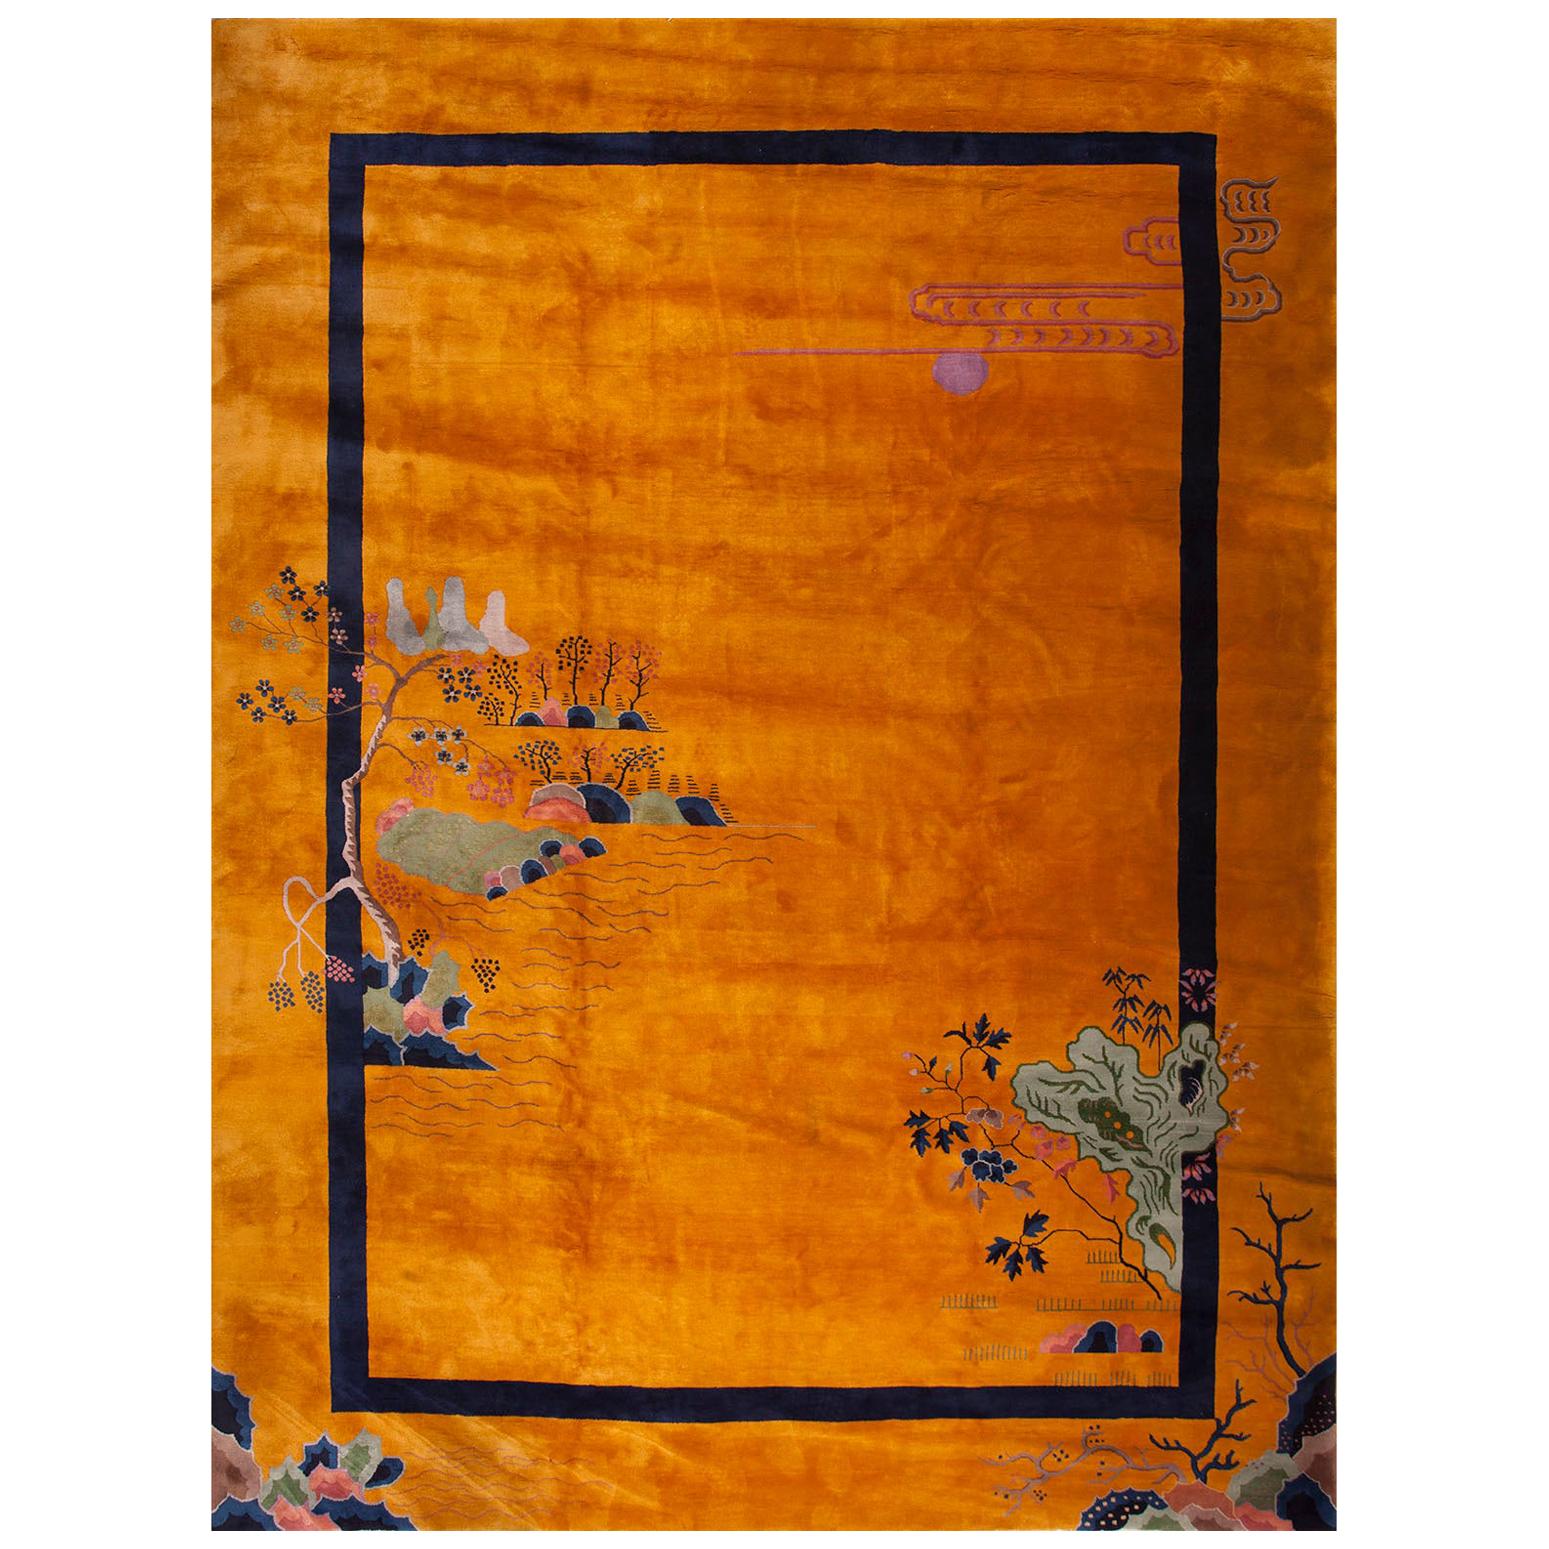 1920s Chinese Art Deco Carpet by Walter Nichols ( 11'2" x 15'4" - 340 x 467 )